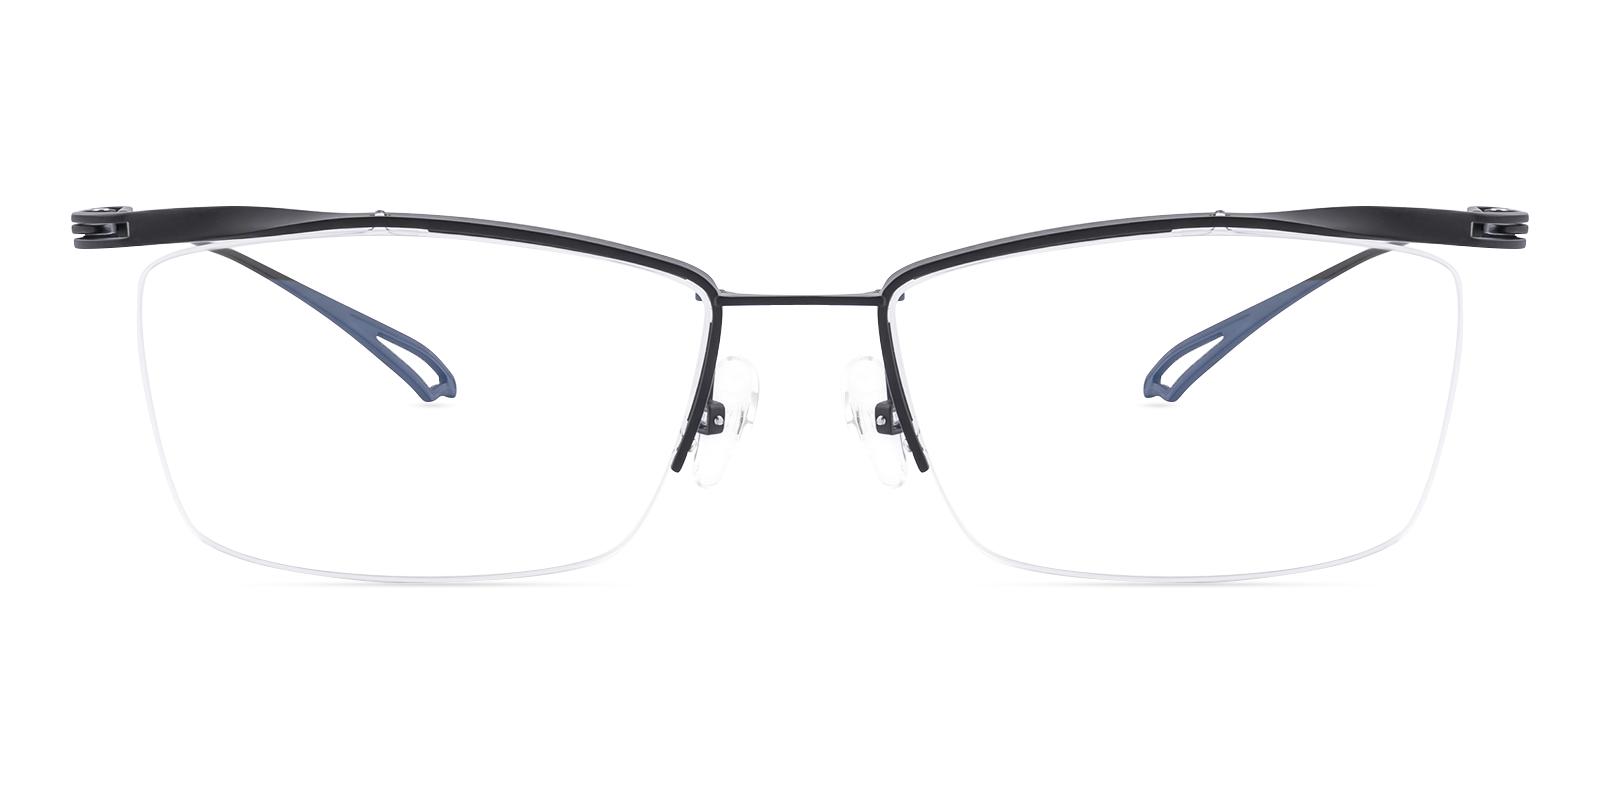 Judicitic Black Titanium Eyeglasses , NosePads Frames from ABBE Glasses